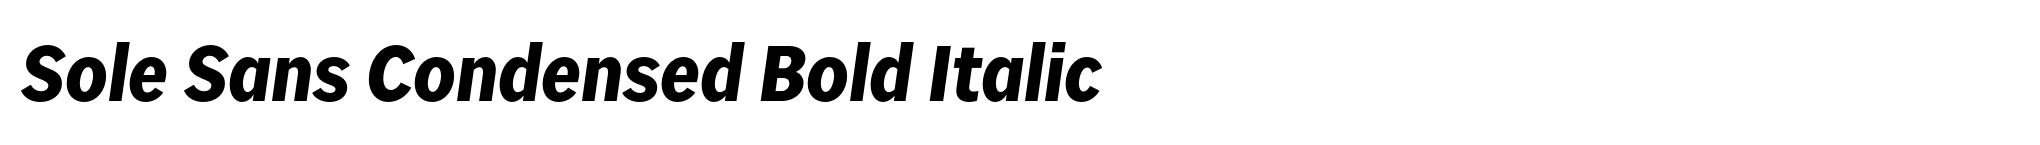 Sole Sans Condensed Bold Italic image